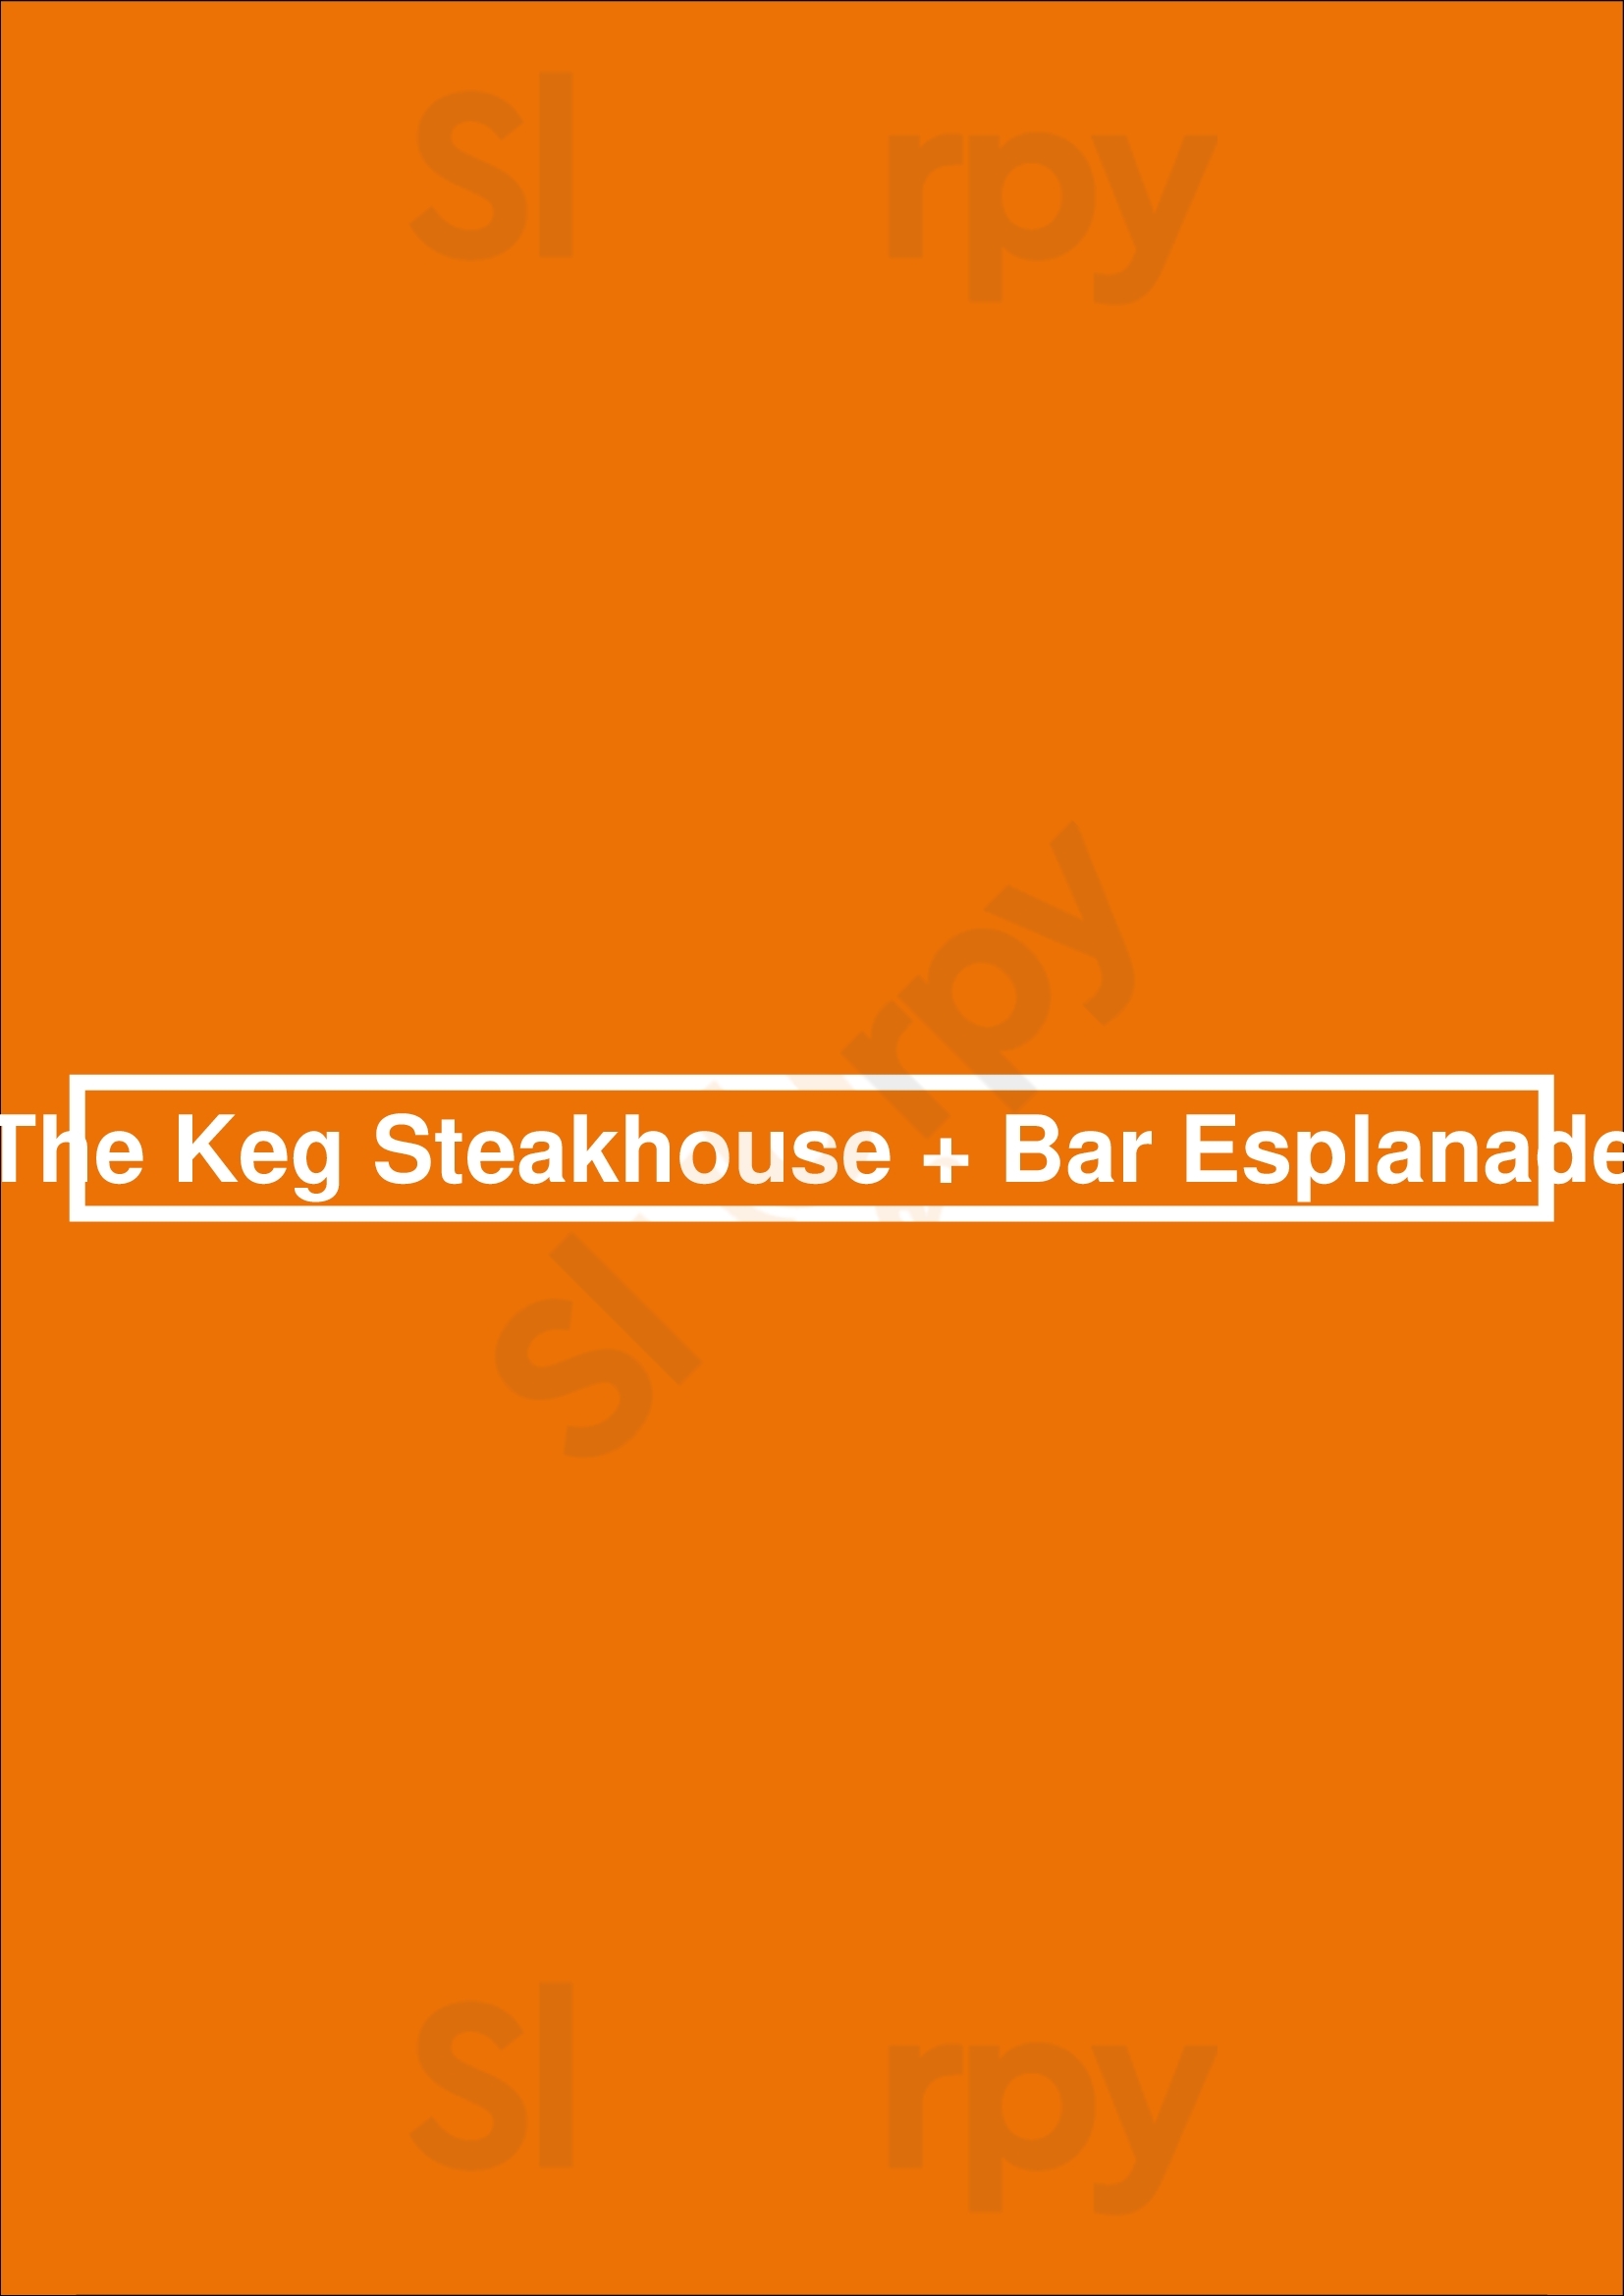 The Keg Steakhouse + Bar - Esplanade Toronto Menu - 1